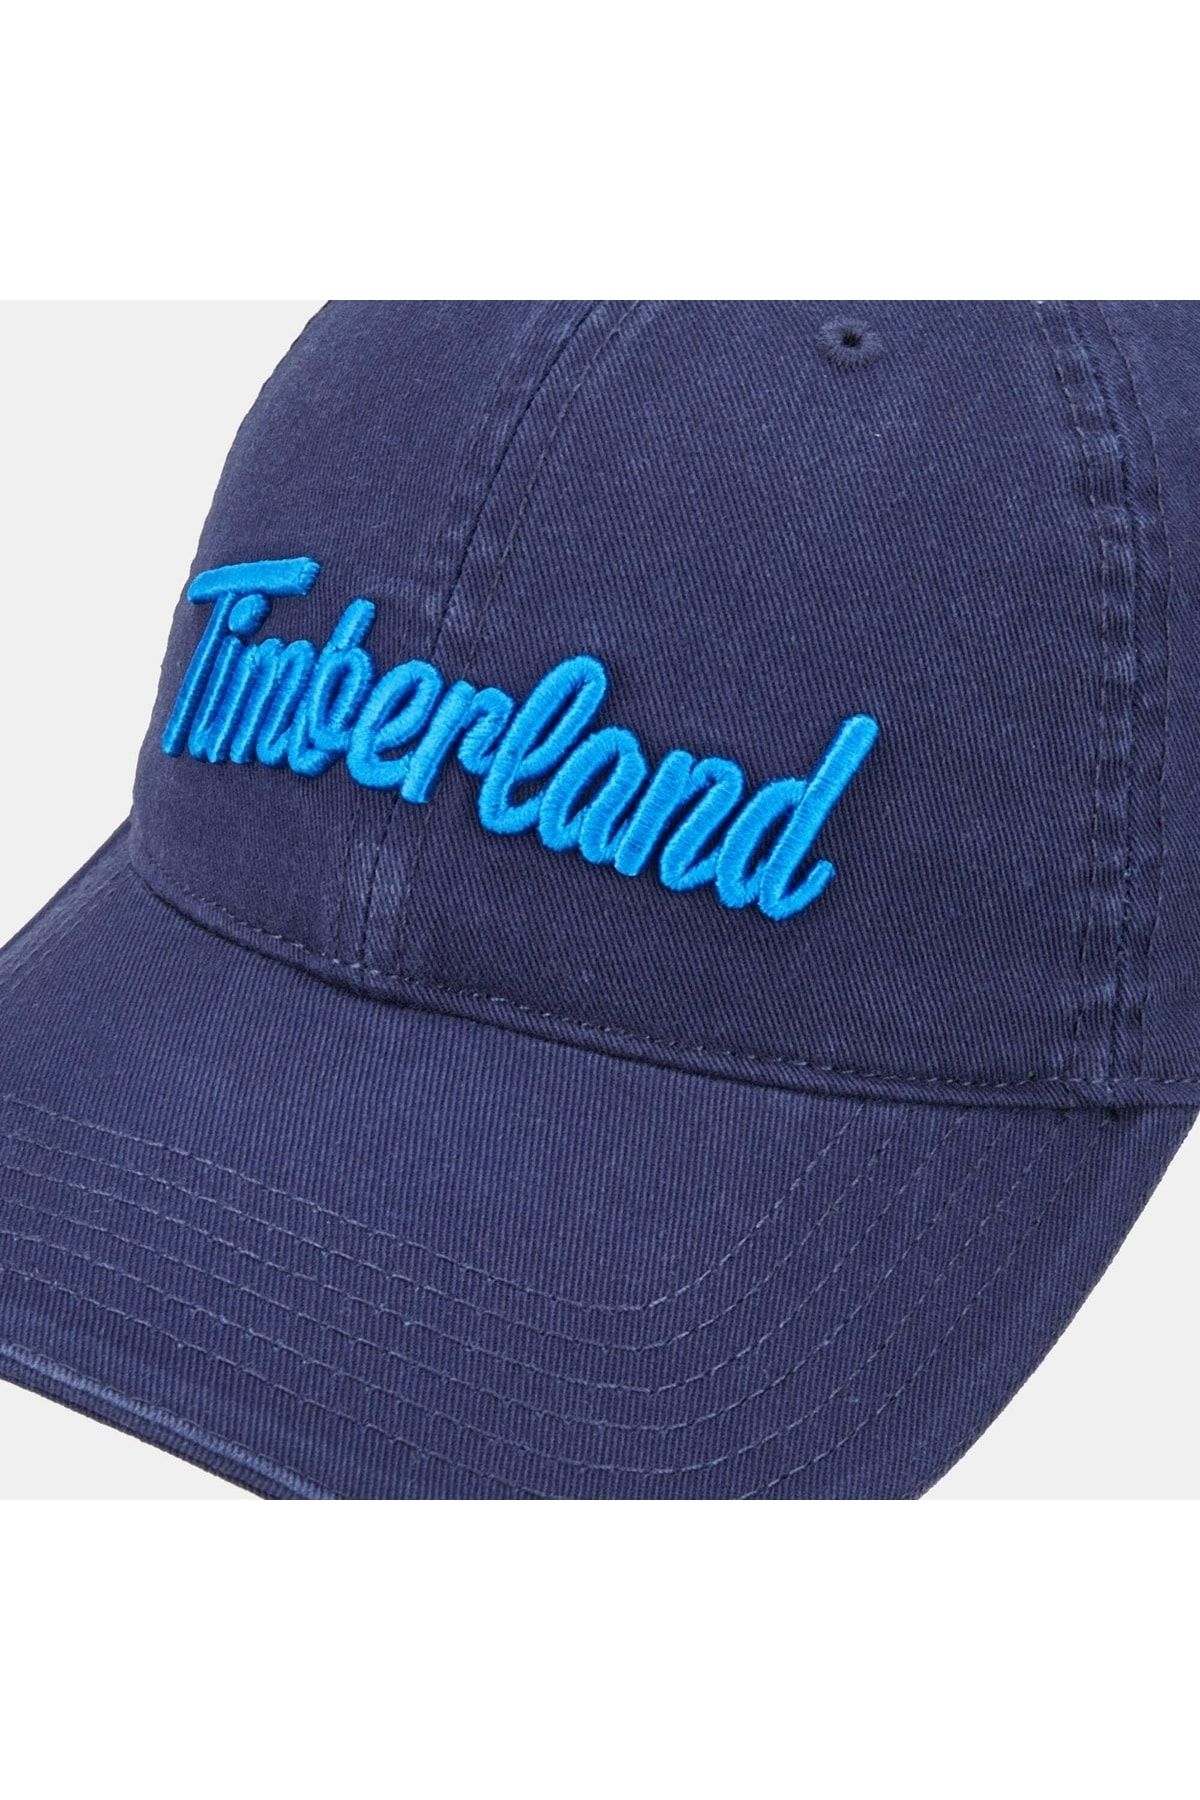 Timberland Embroidered Logo Baseball Cap - Peacoat